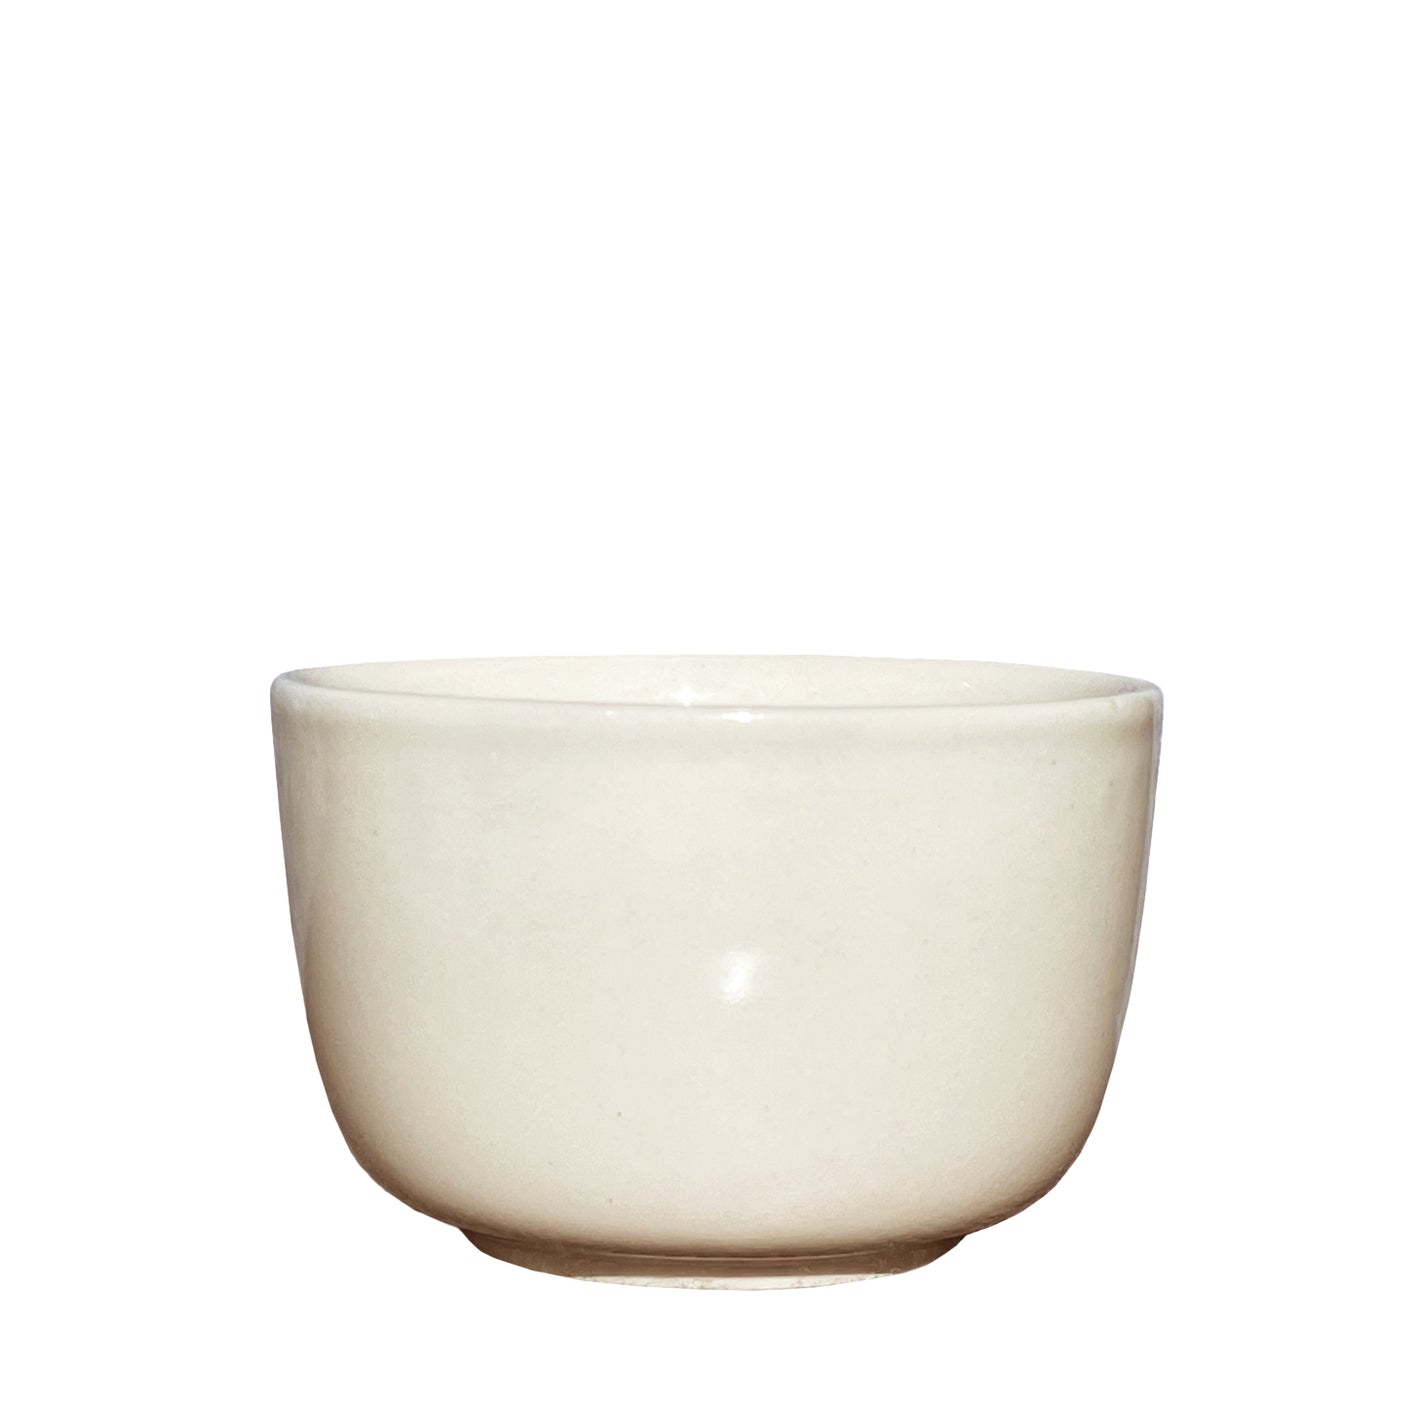 Redecker Ceramic Shave Bowl